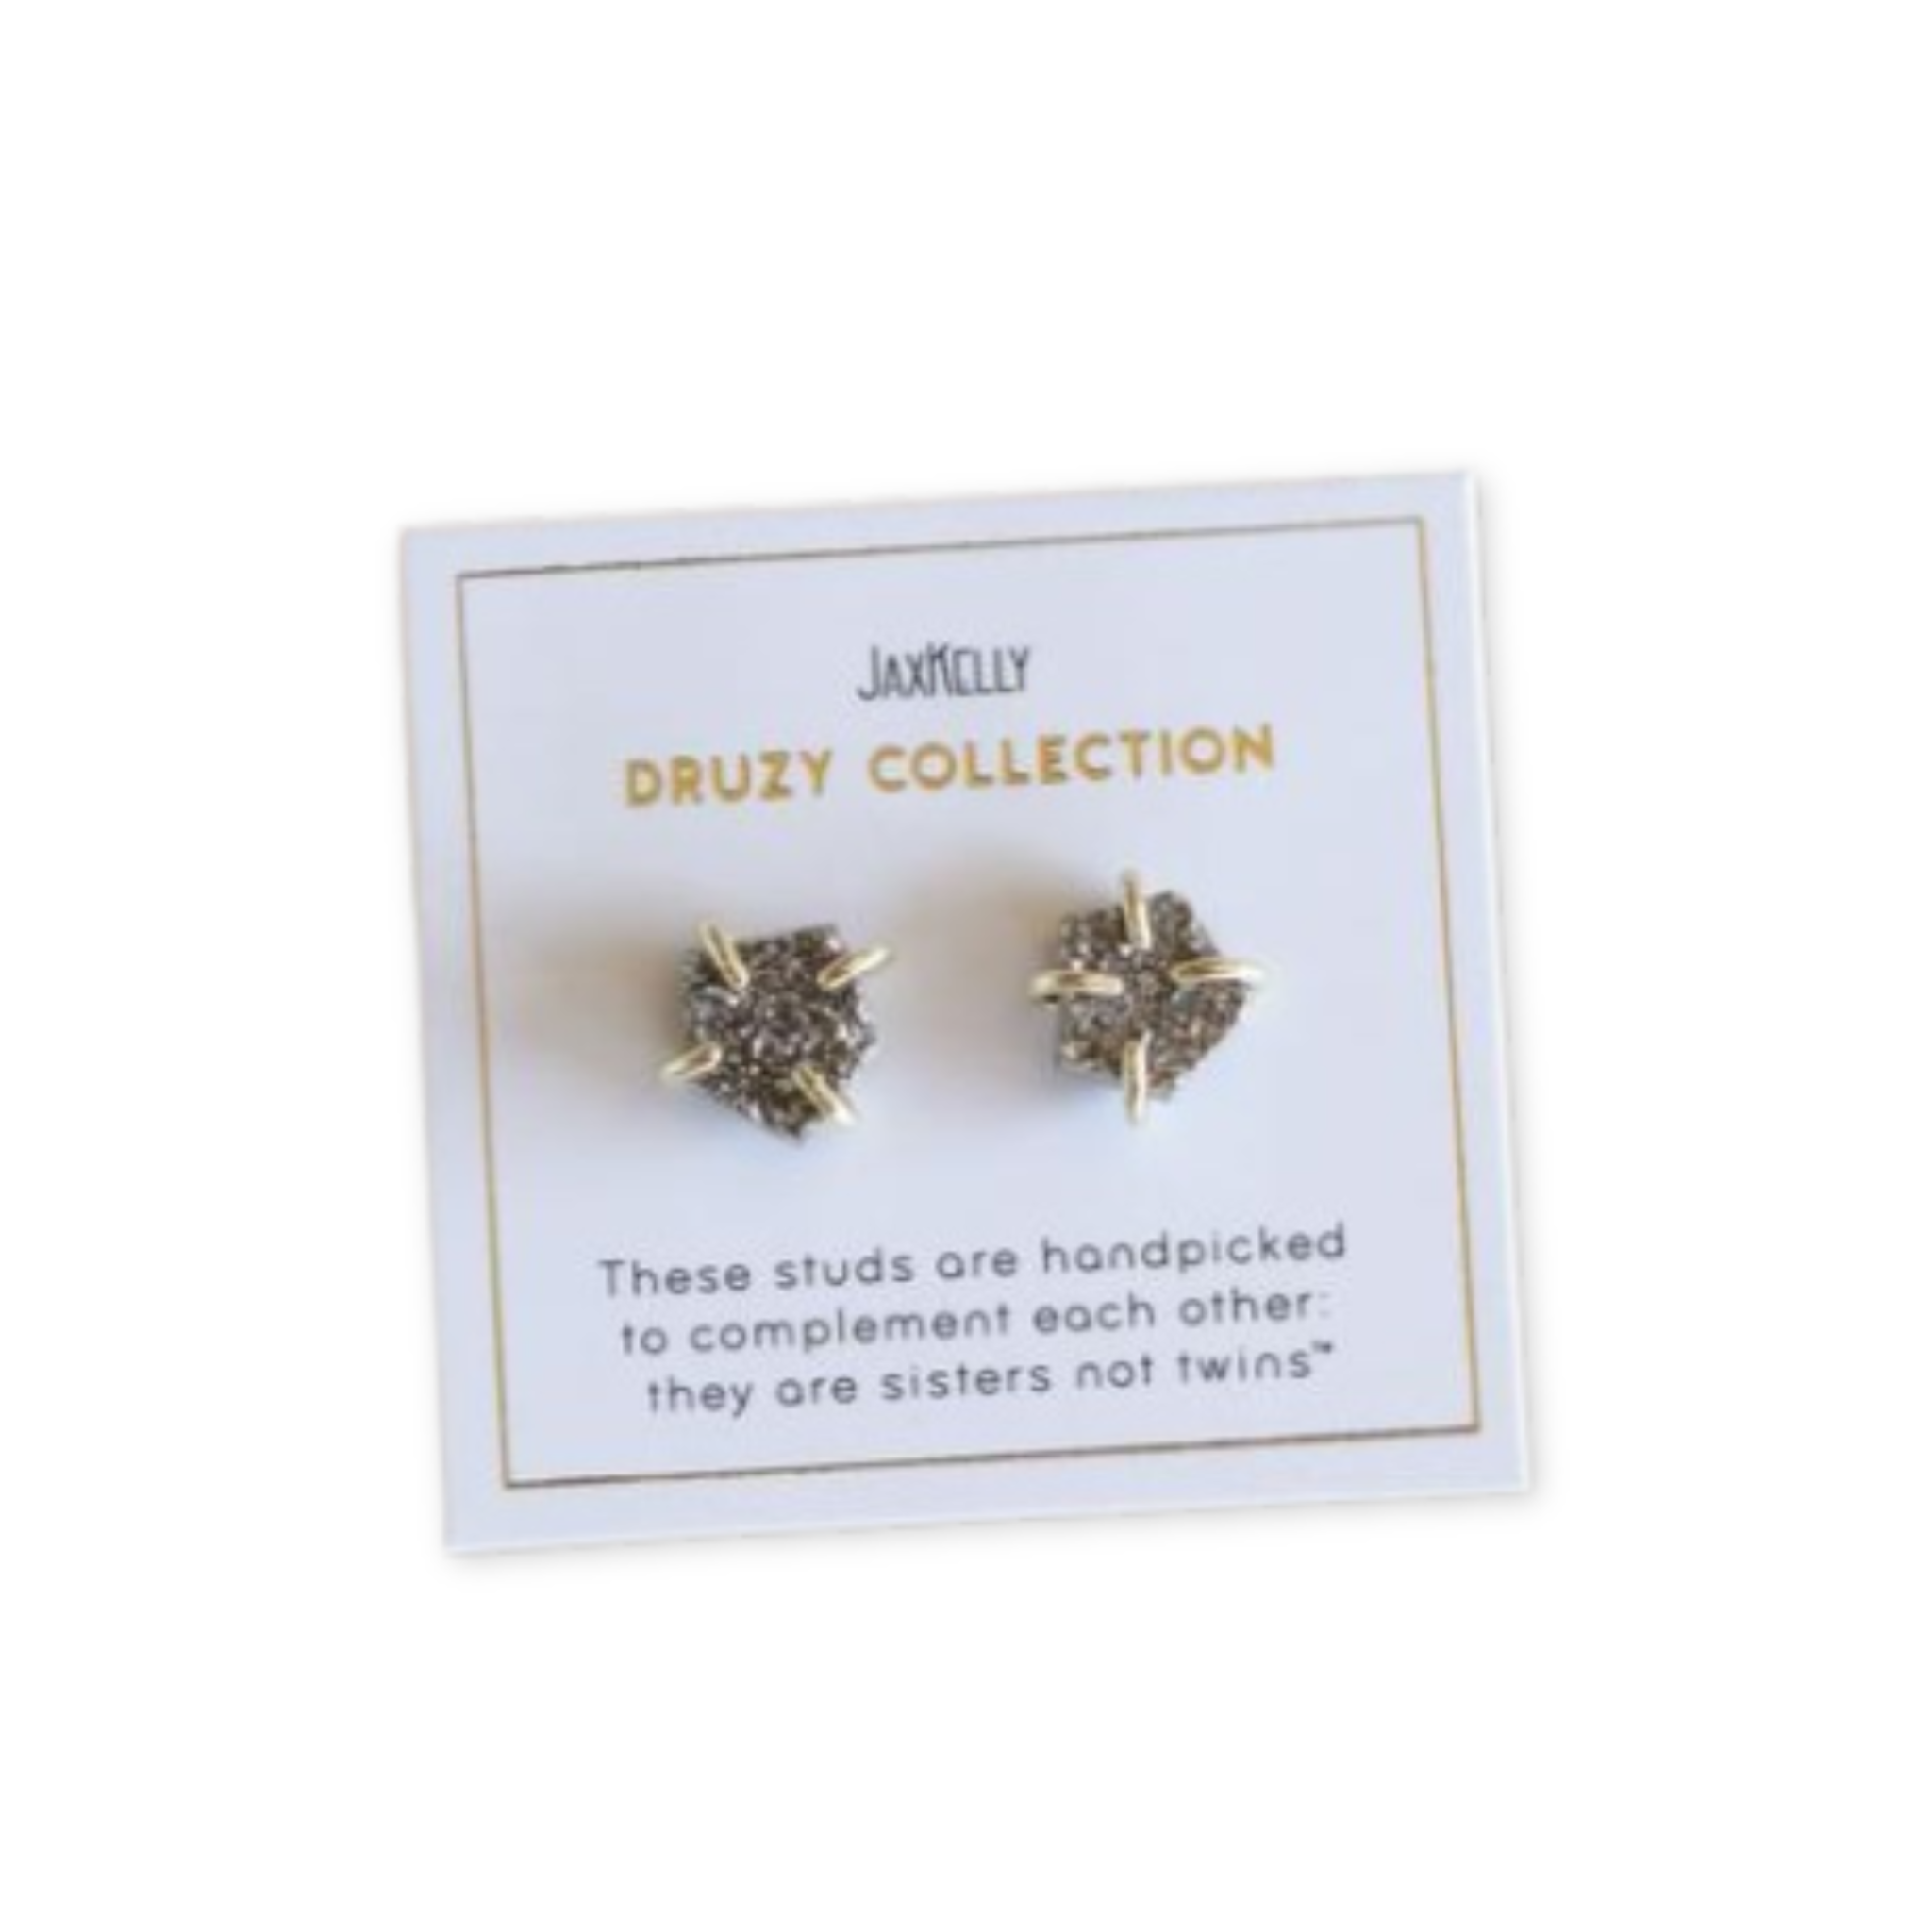 stud earrings with druzy stones